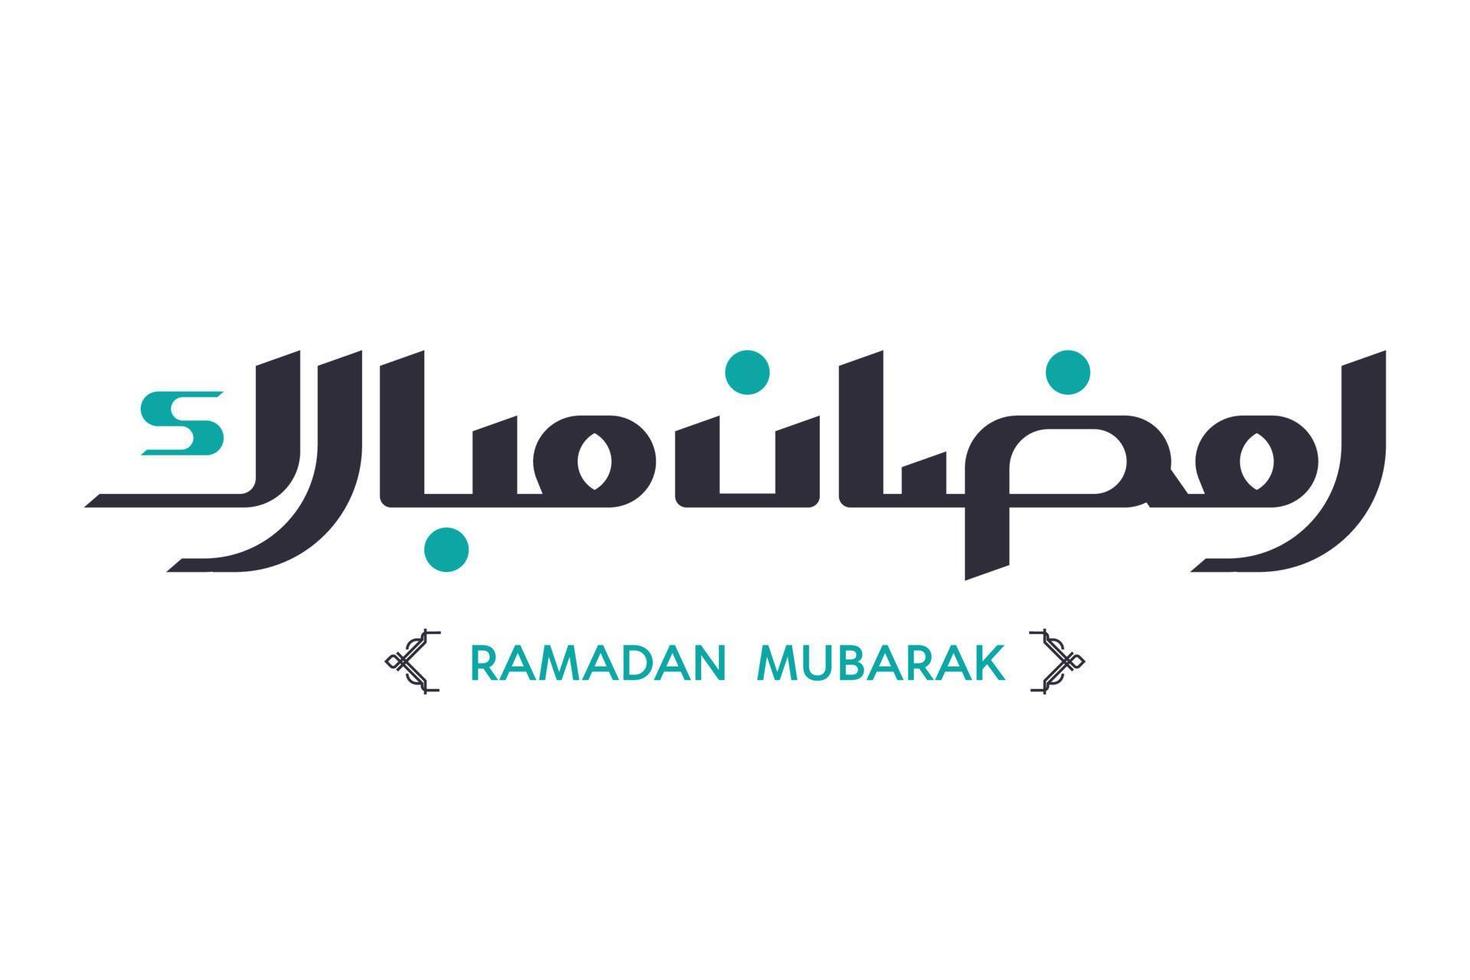 Ramadan Mubarak Arabic Calligraphy. Ramadan Kareem Greeting Card. Ramadhan Kareem. Happy Ramadan and Holy Ramadan. Month of fasting for Muslims. Vector illustration